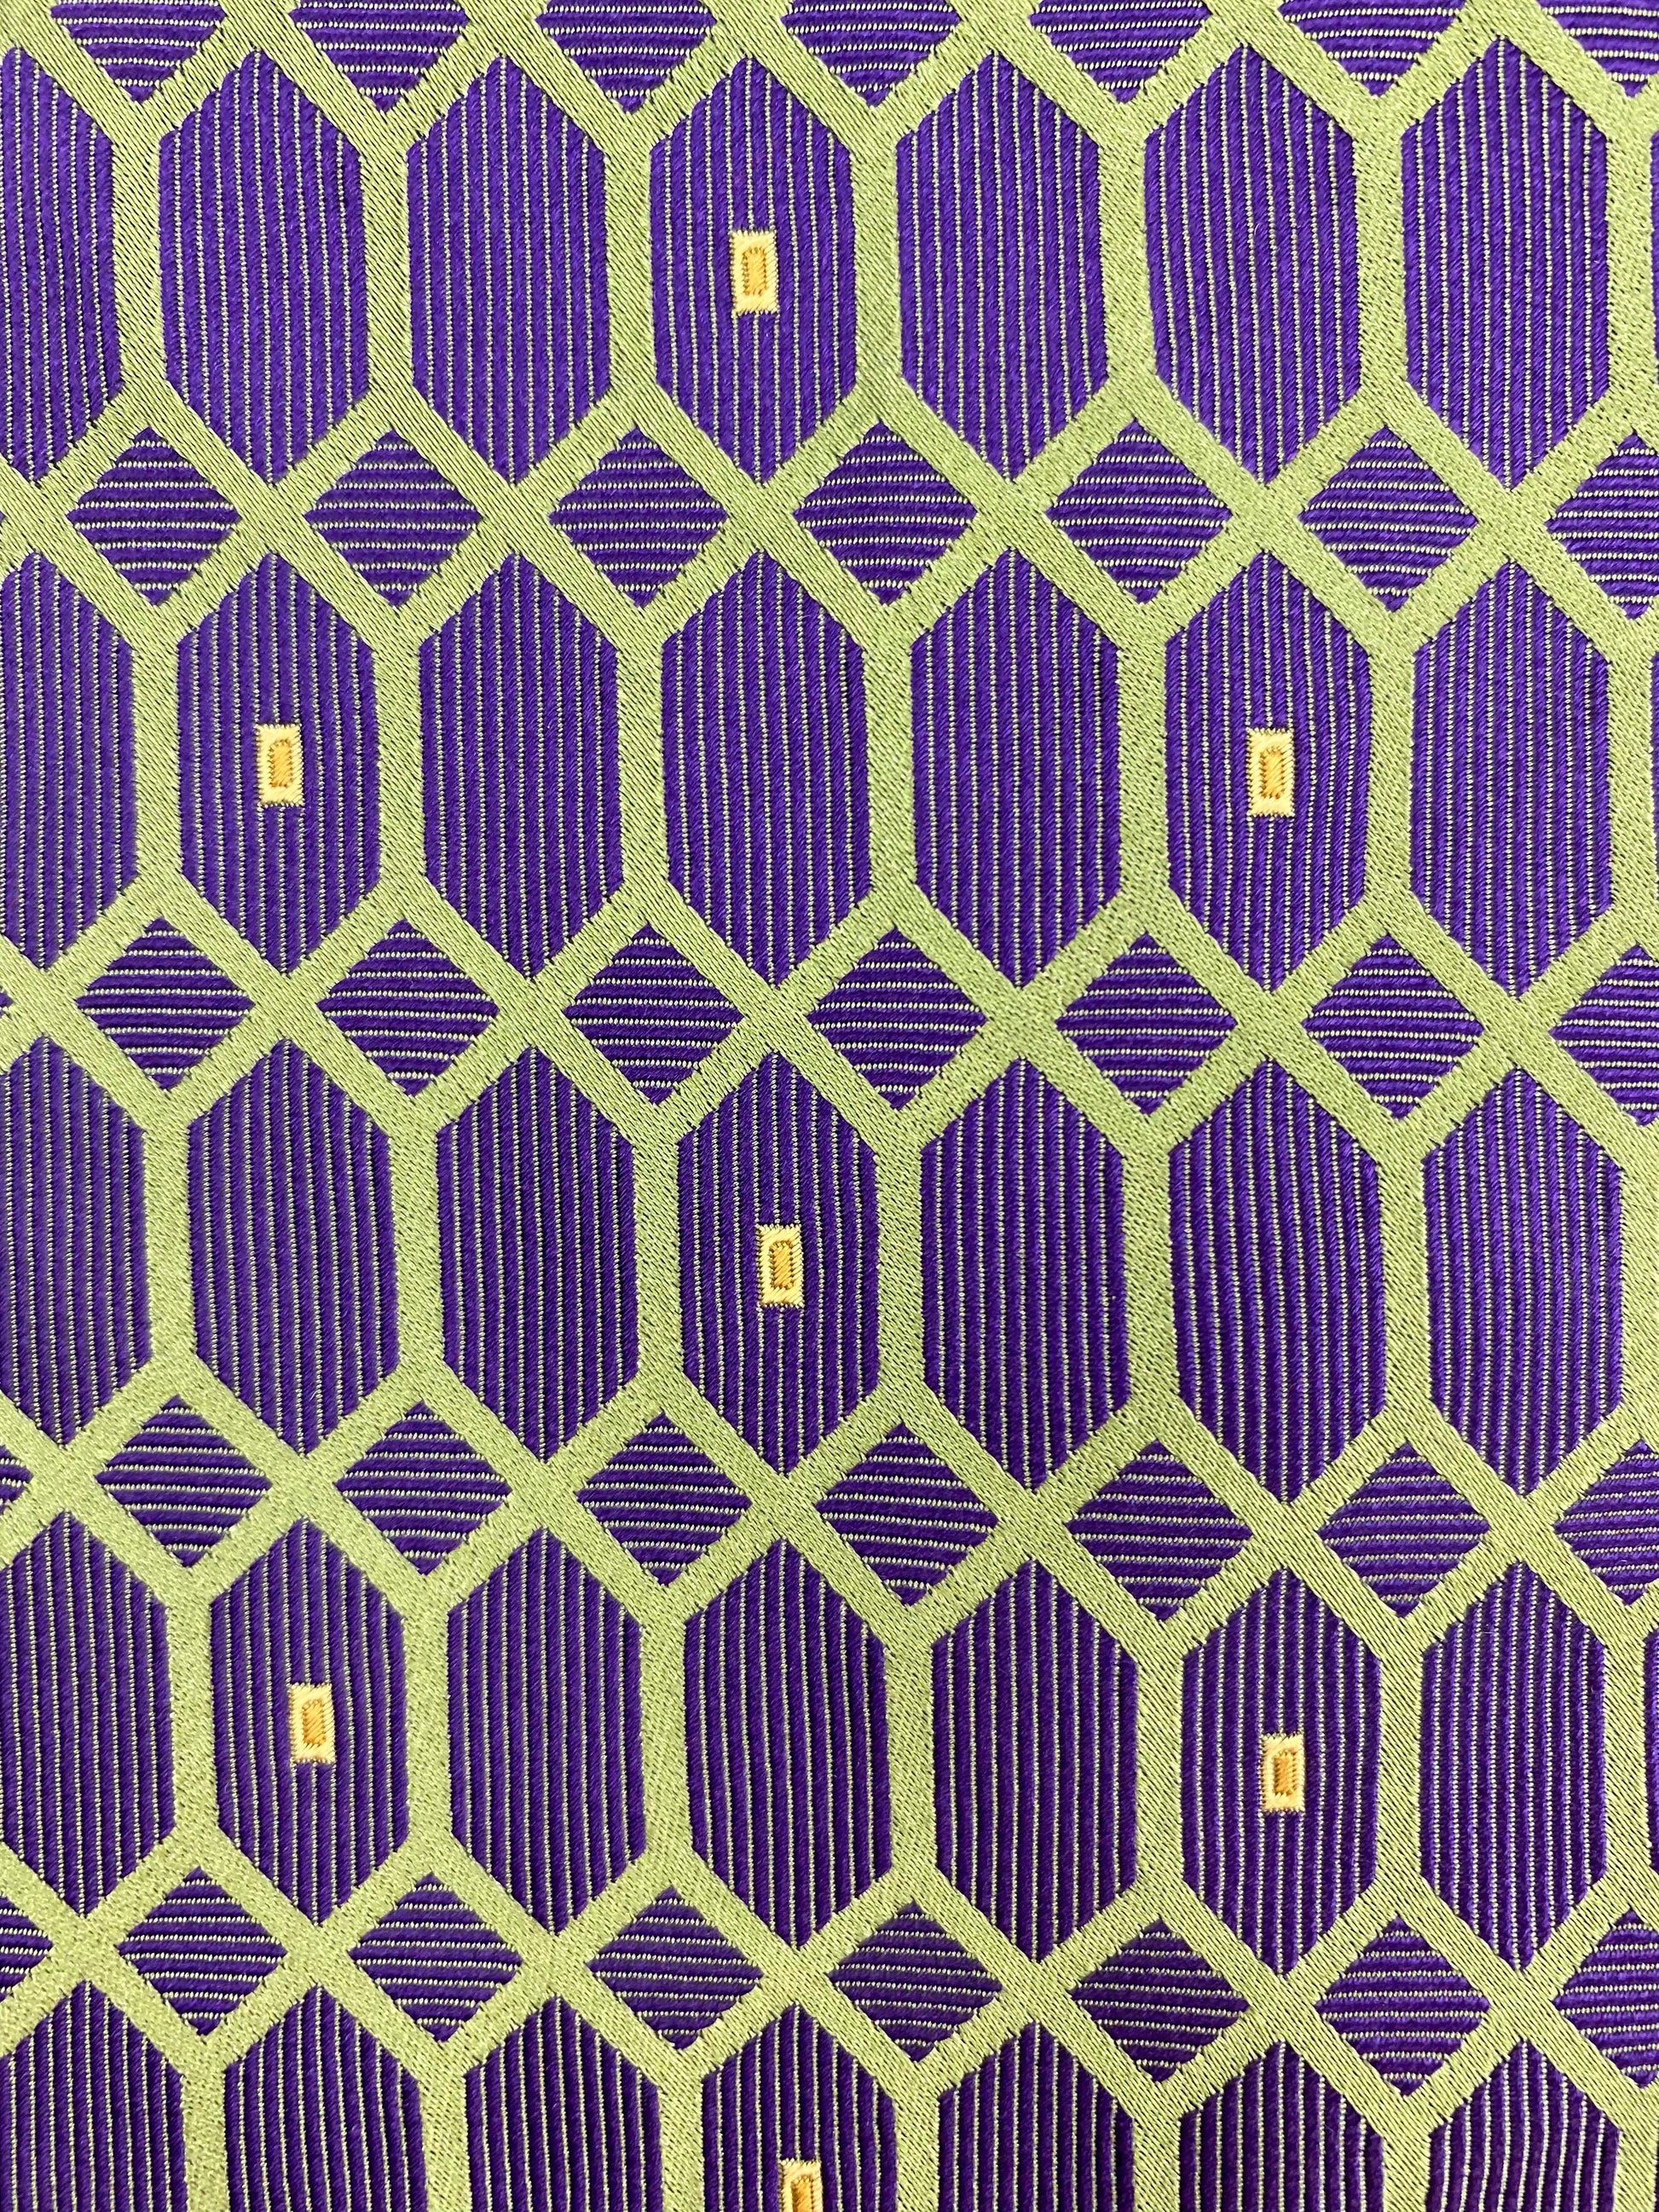 90s Deadstock Silk Necktie, Men's Vintage Purple/ Green Lattice Pattern Tie, NOS